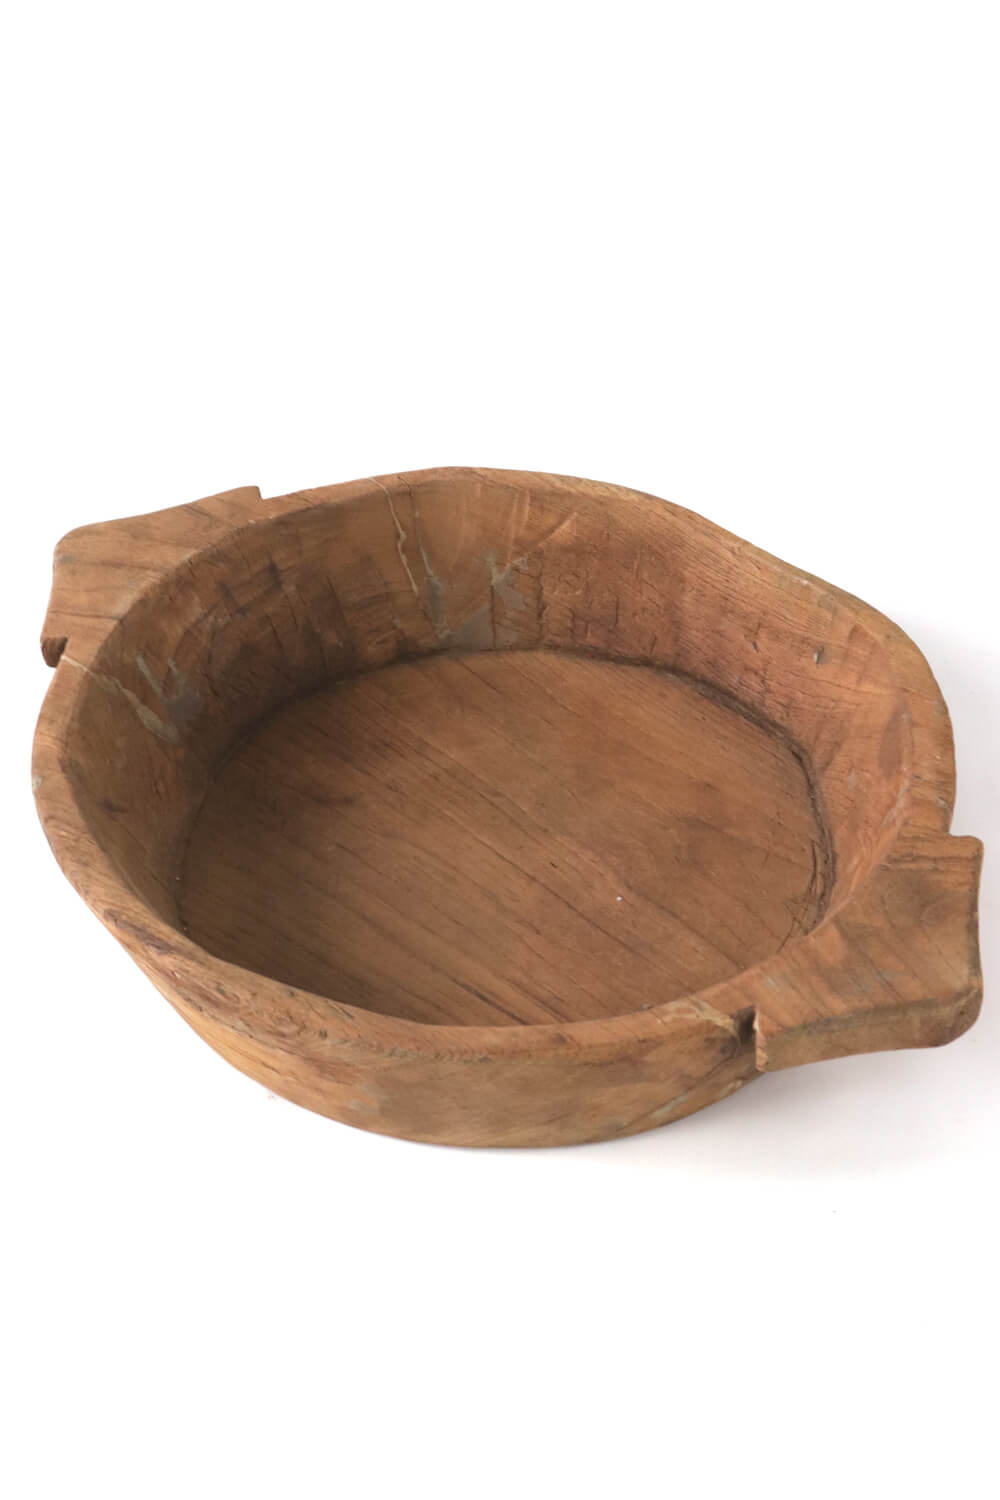 antique rustic wooden bowl